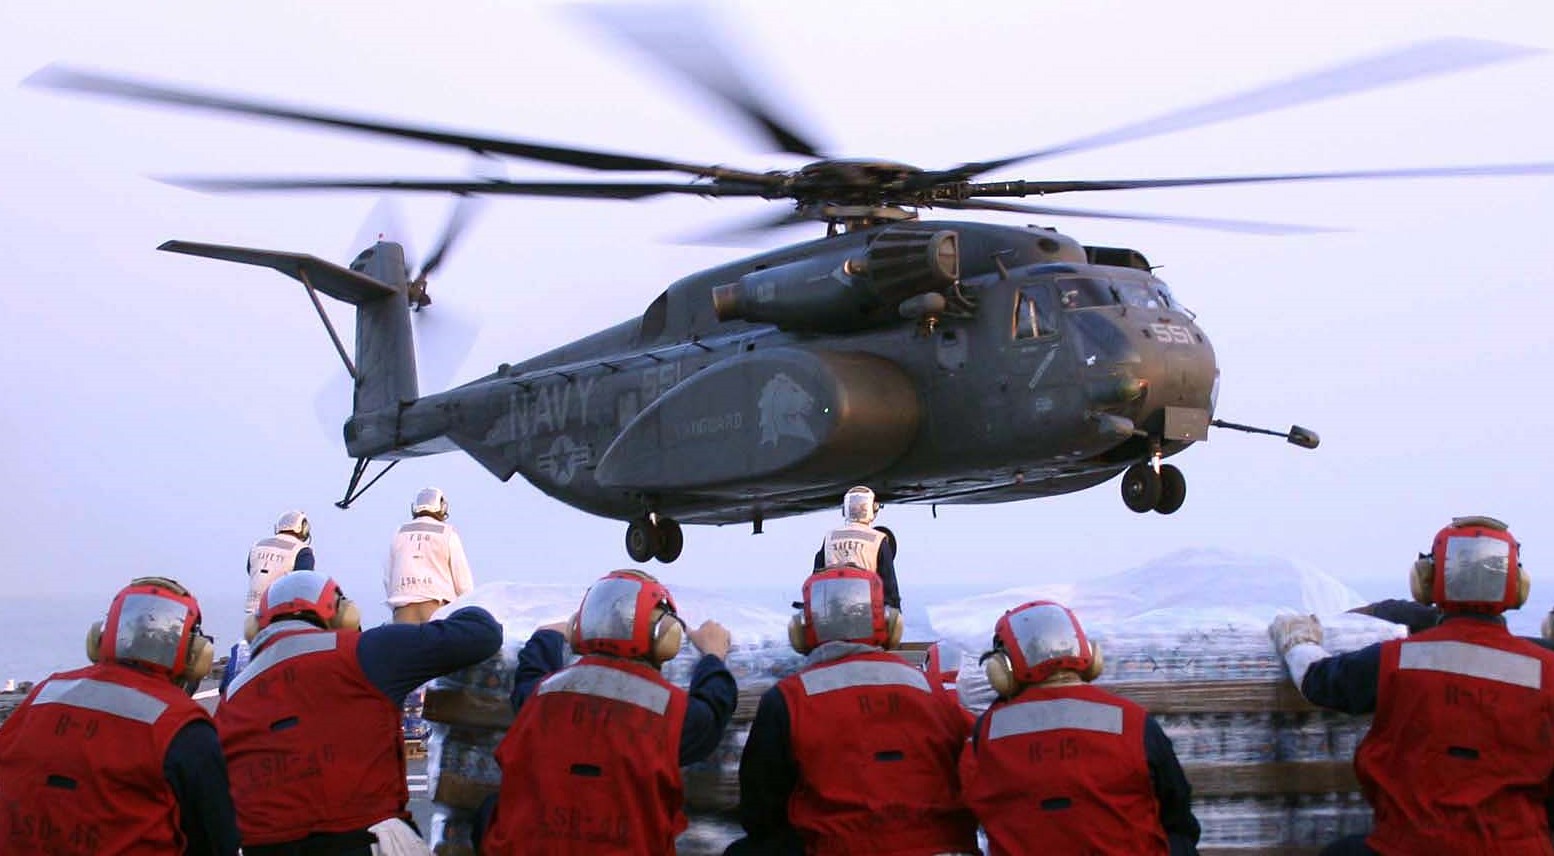 hm-14 vanguard helicopter mine countermeasures squadron navy mh-53e sea dragon 43 uss tortuga lsd-46